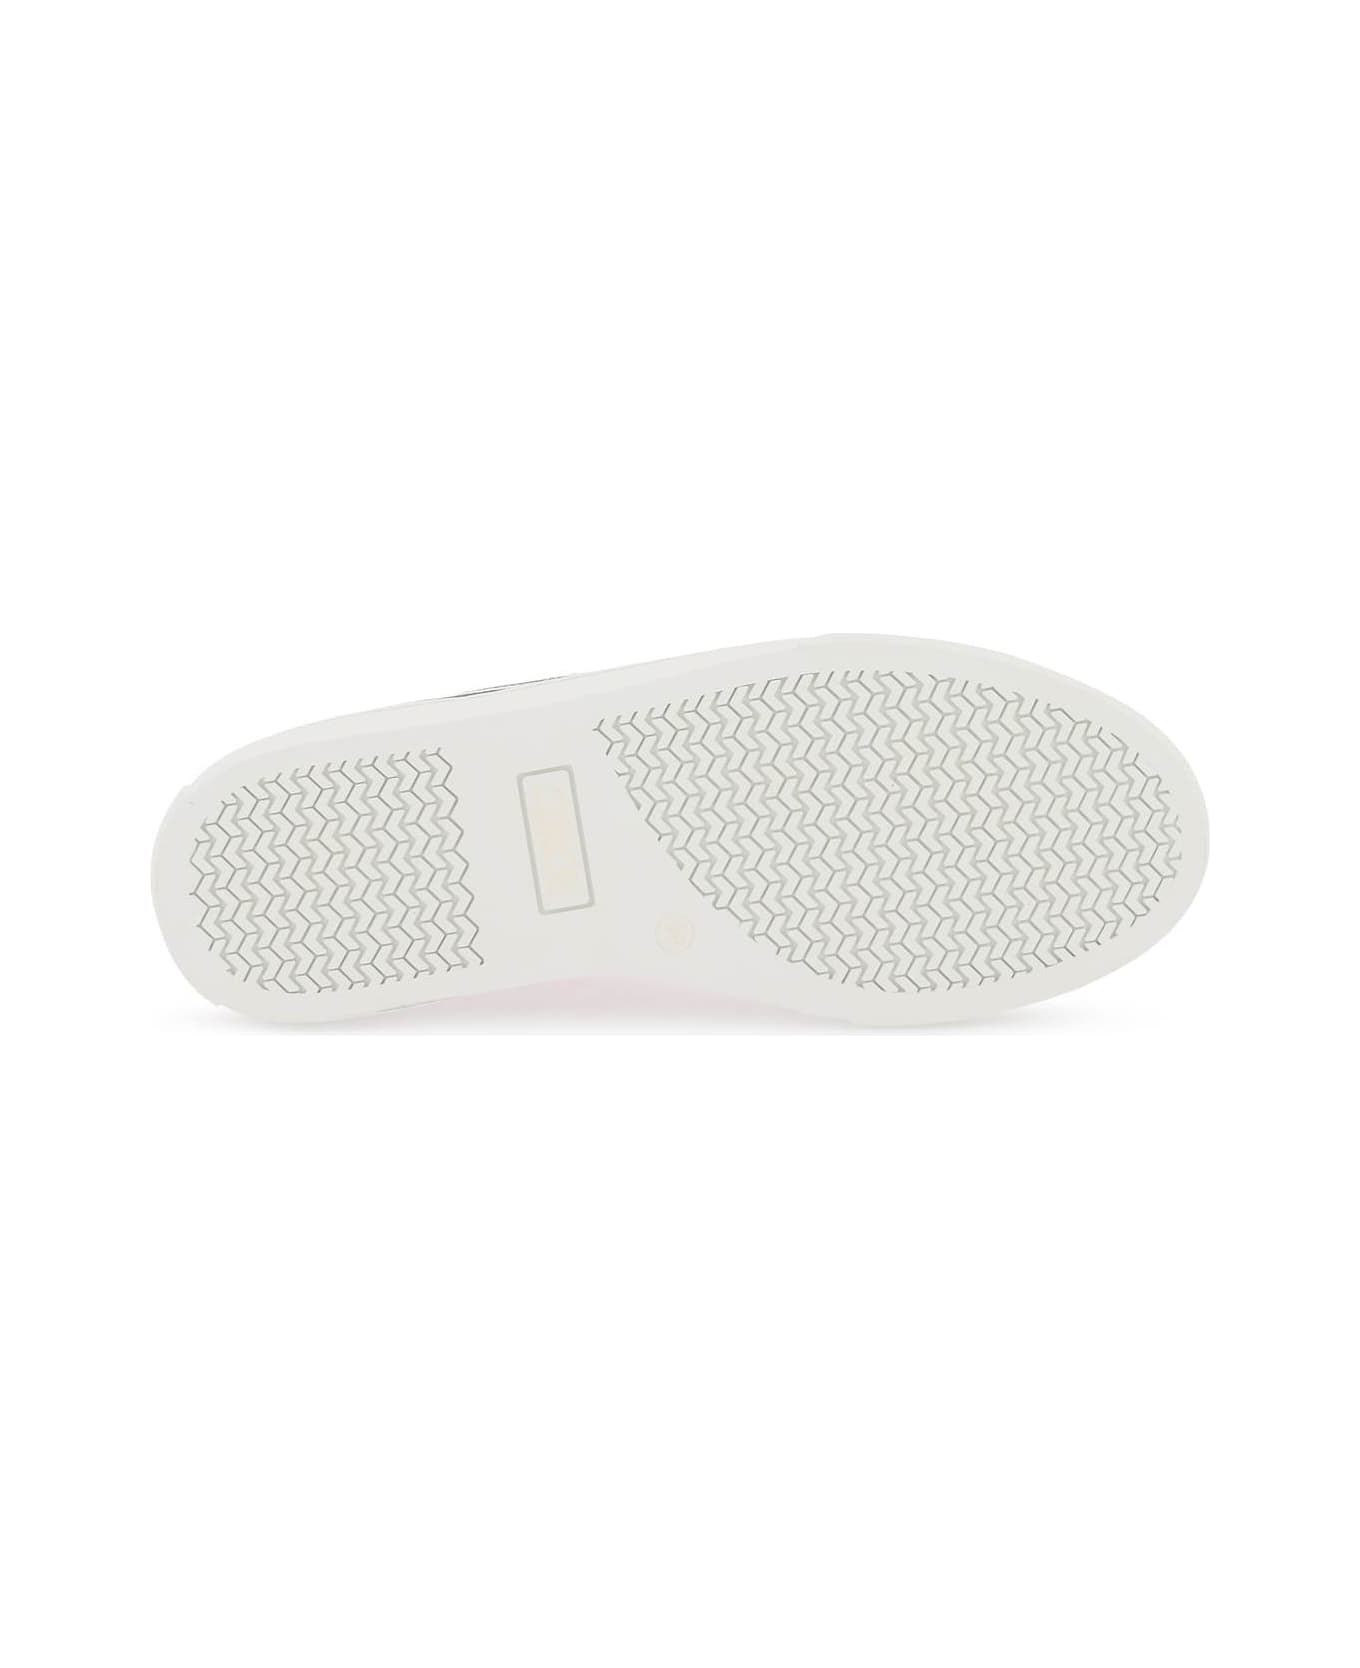 Vivienne Westwood Plimsoll Low Top 2.0 Sneakers - OPTIC WHITE (White)